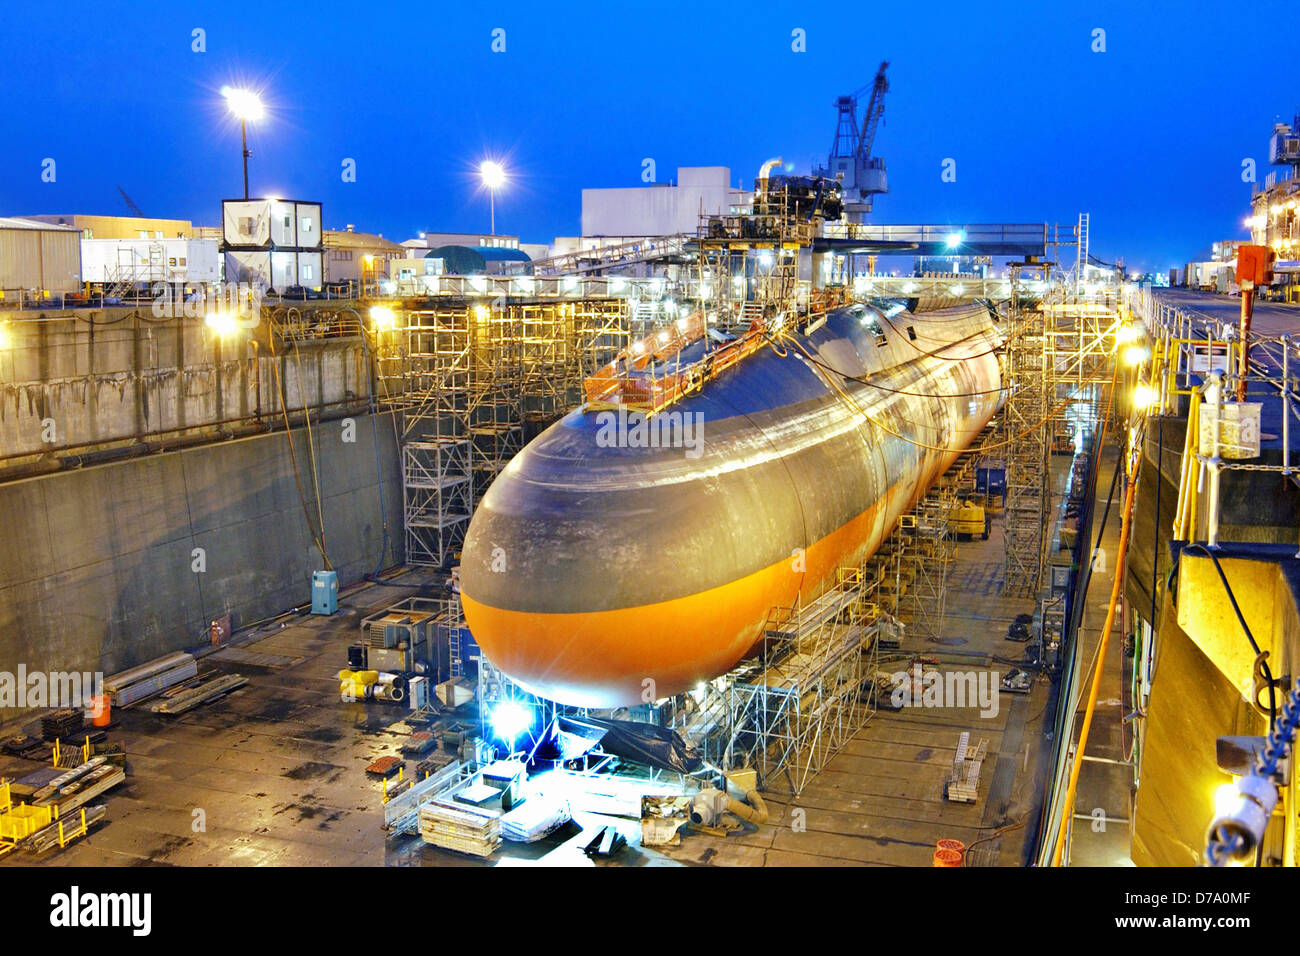 La notte scende a Puget Sound Naval Shipyard Foto Stock